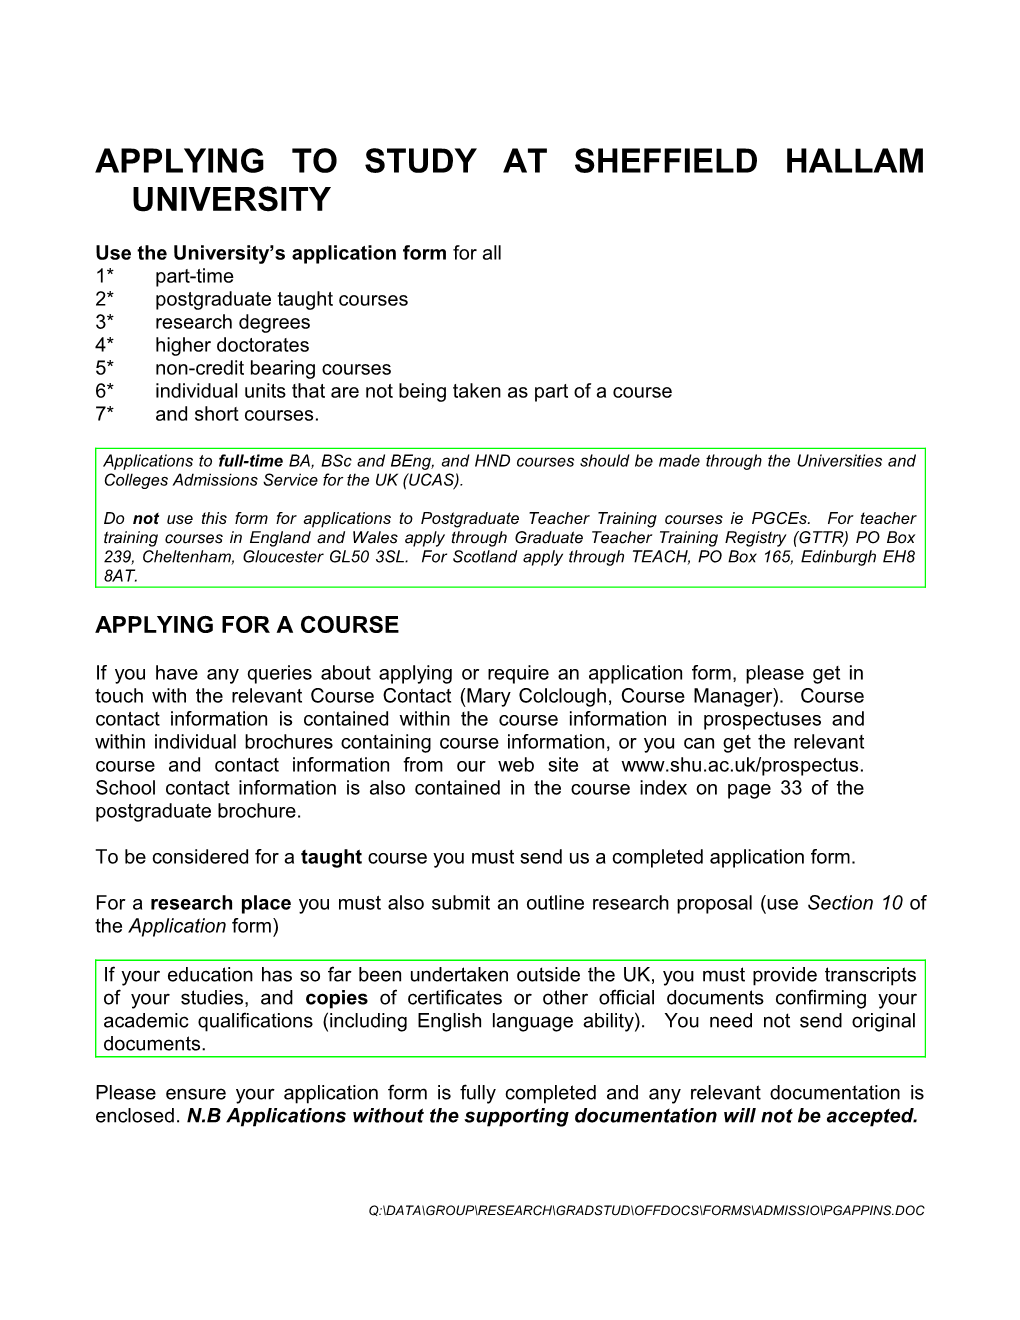 University Application Form - Instructions